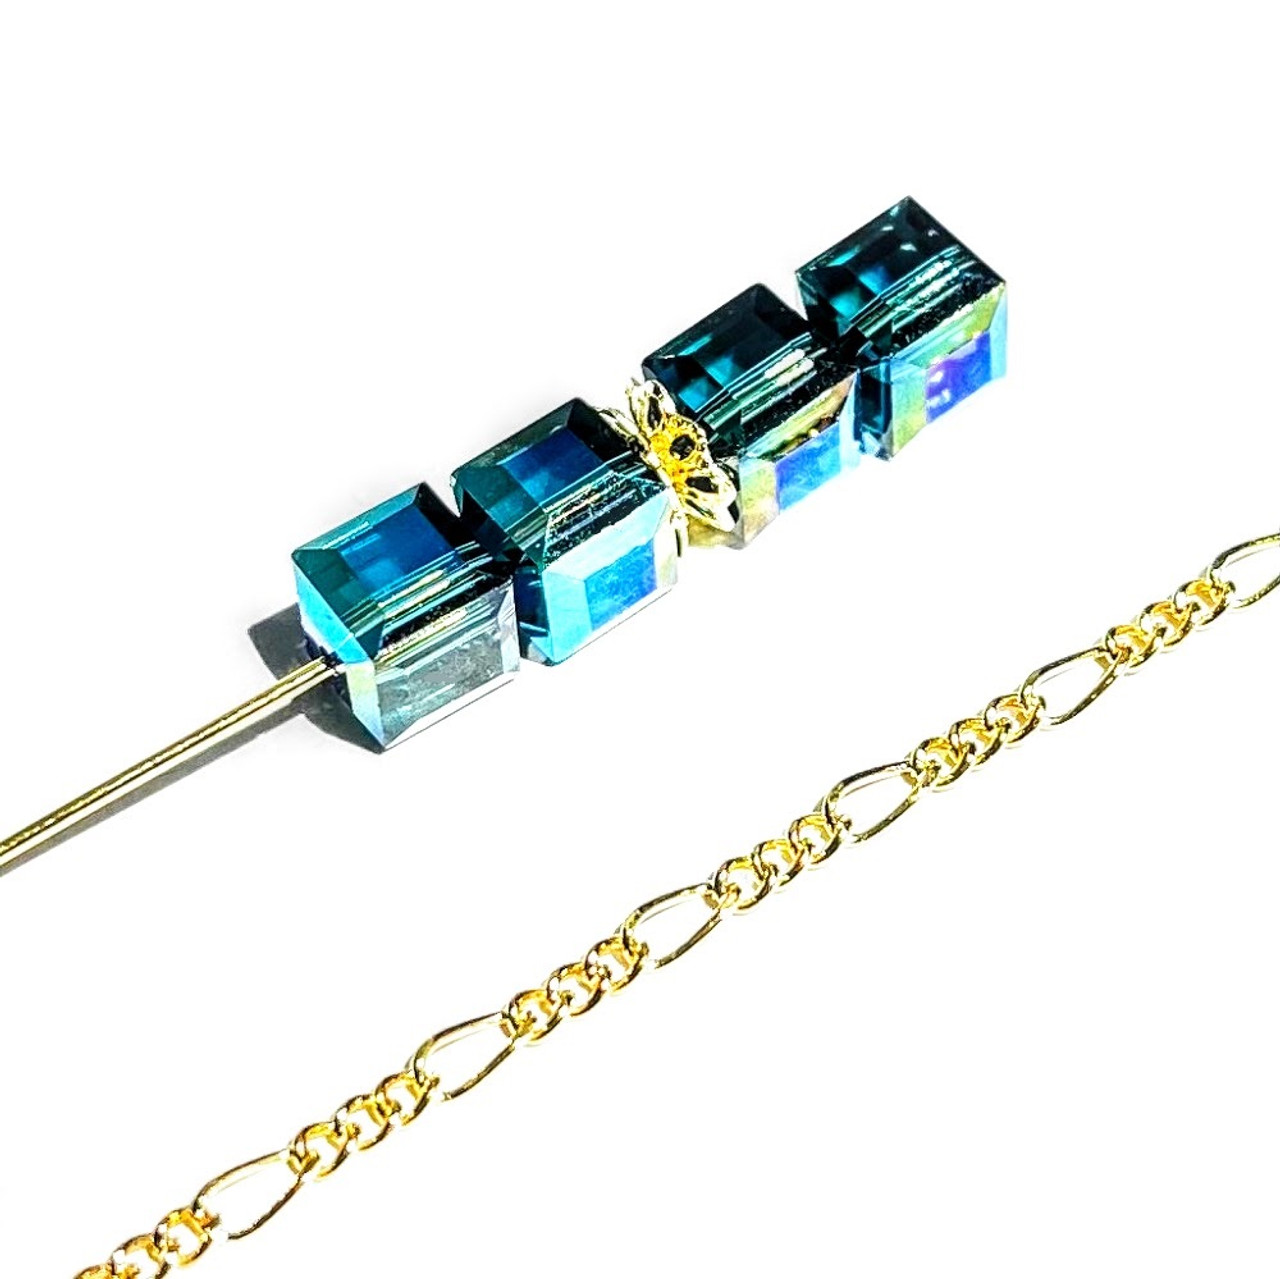 Buy Swarovski Crystal 8mm Rondelle Bracelet Kit ~ Featuring Crystal AB